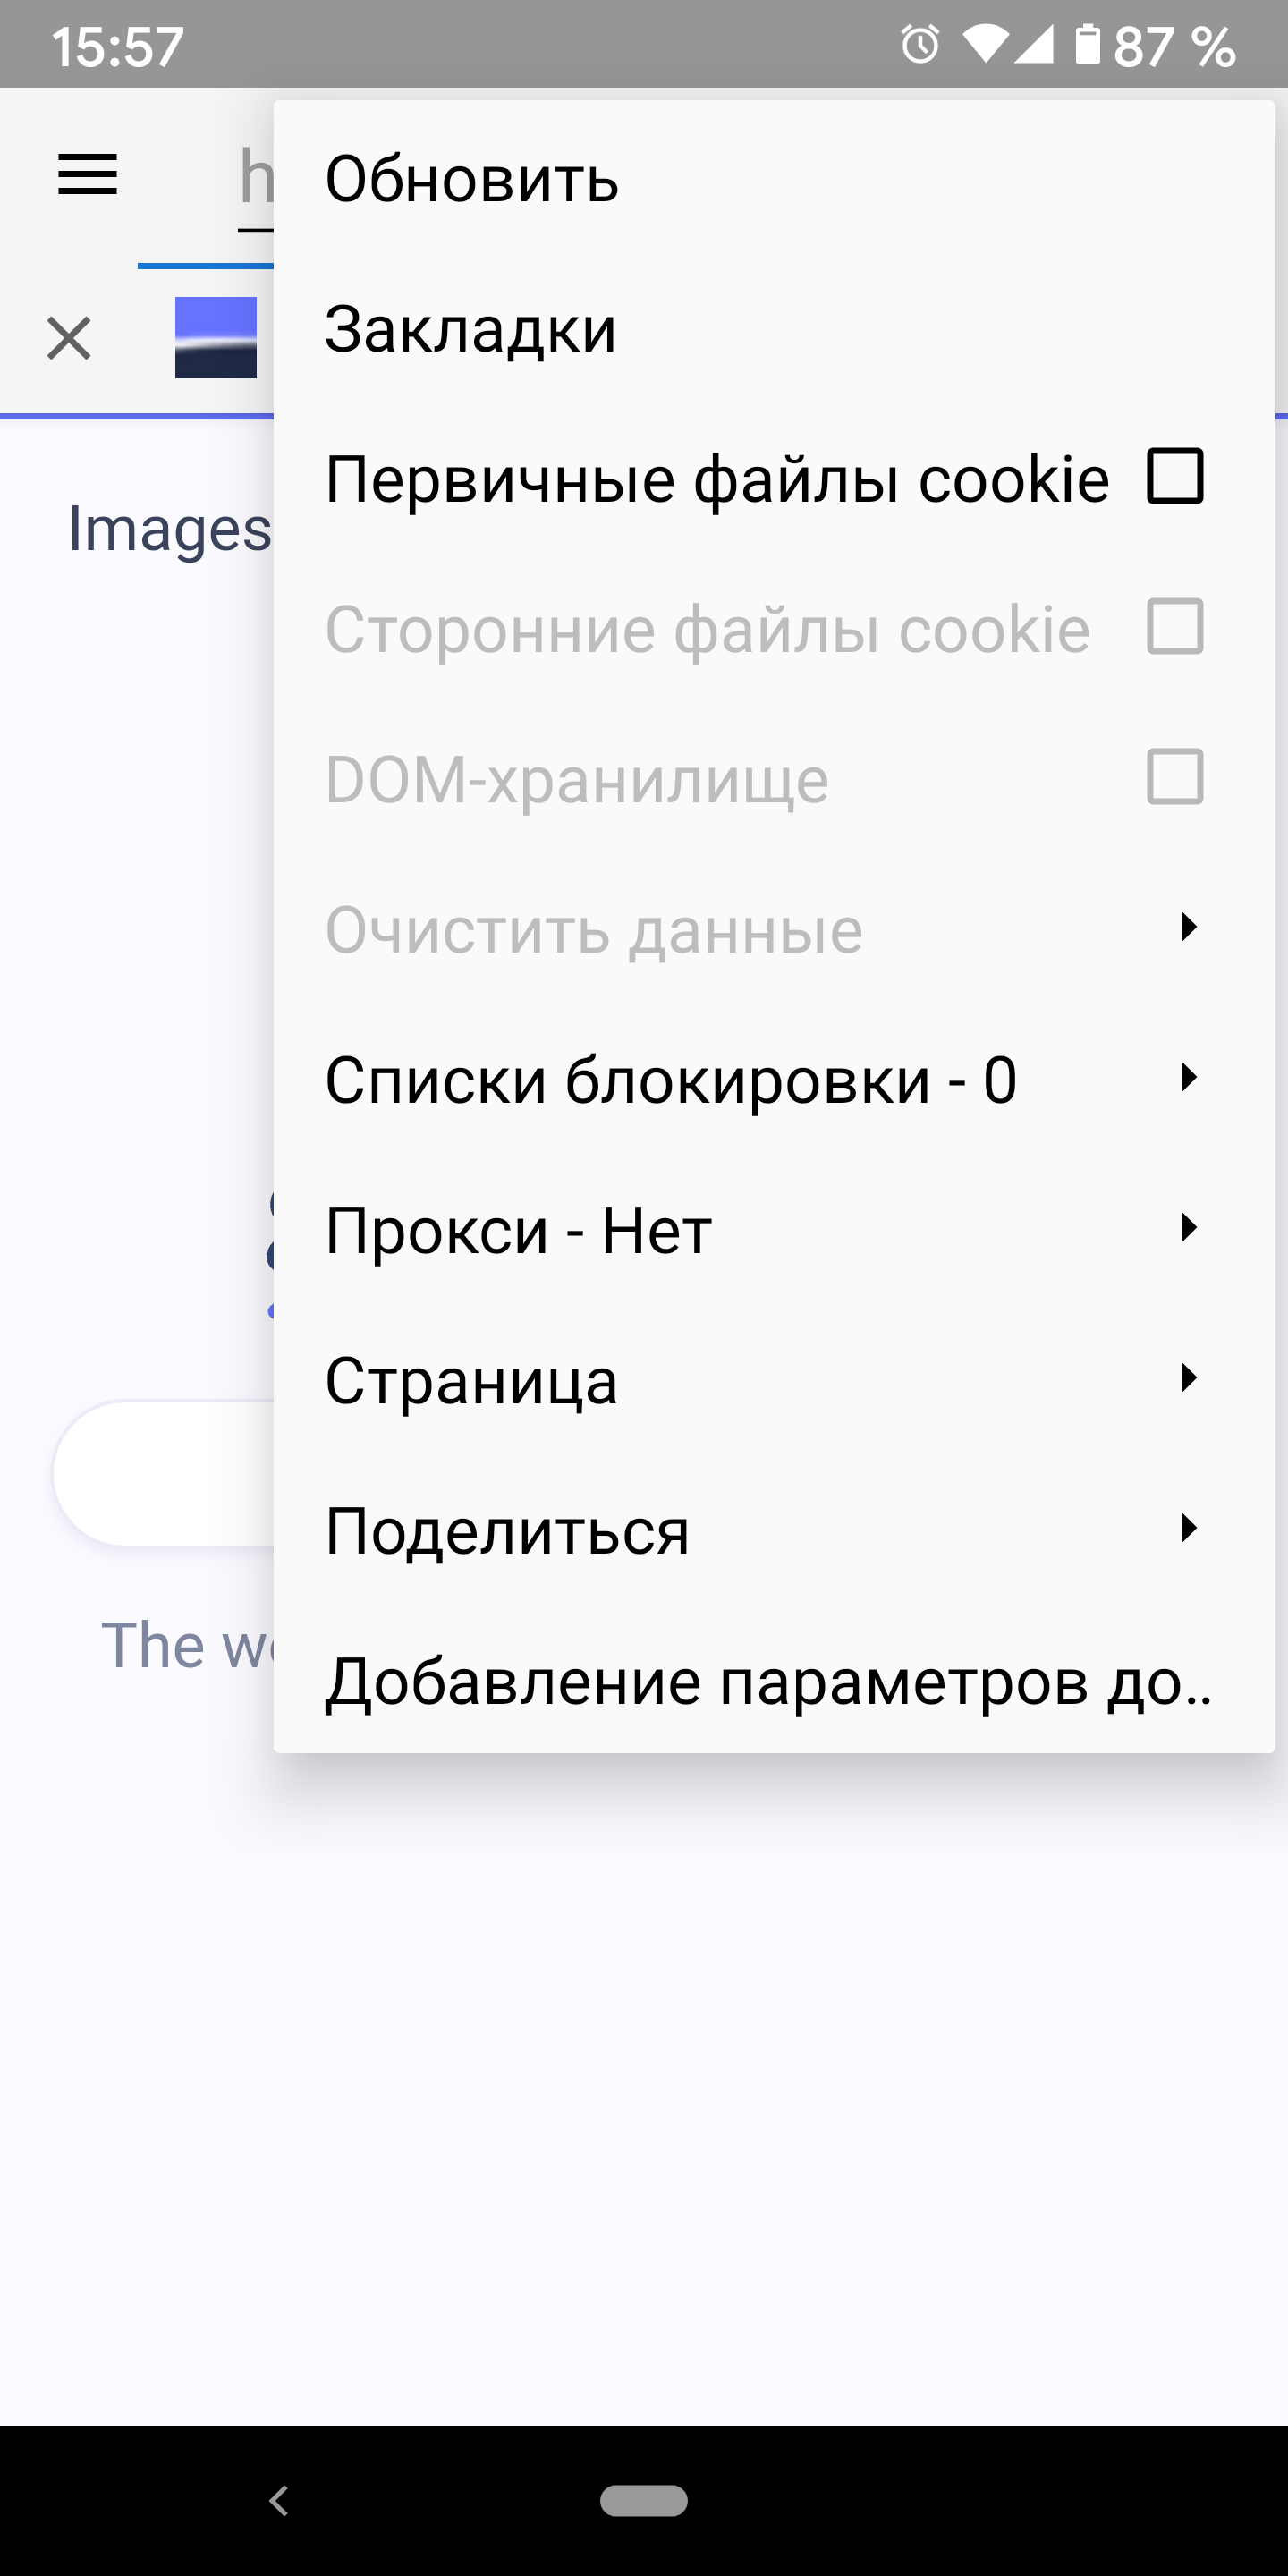 fastlane/metadata/android/ru-RU/images/phoneScreenshots/02-OptionsMenu.png